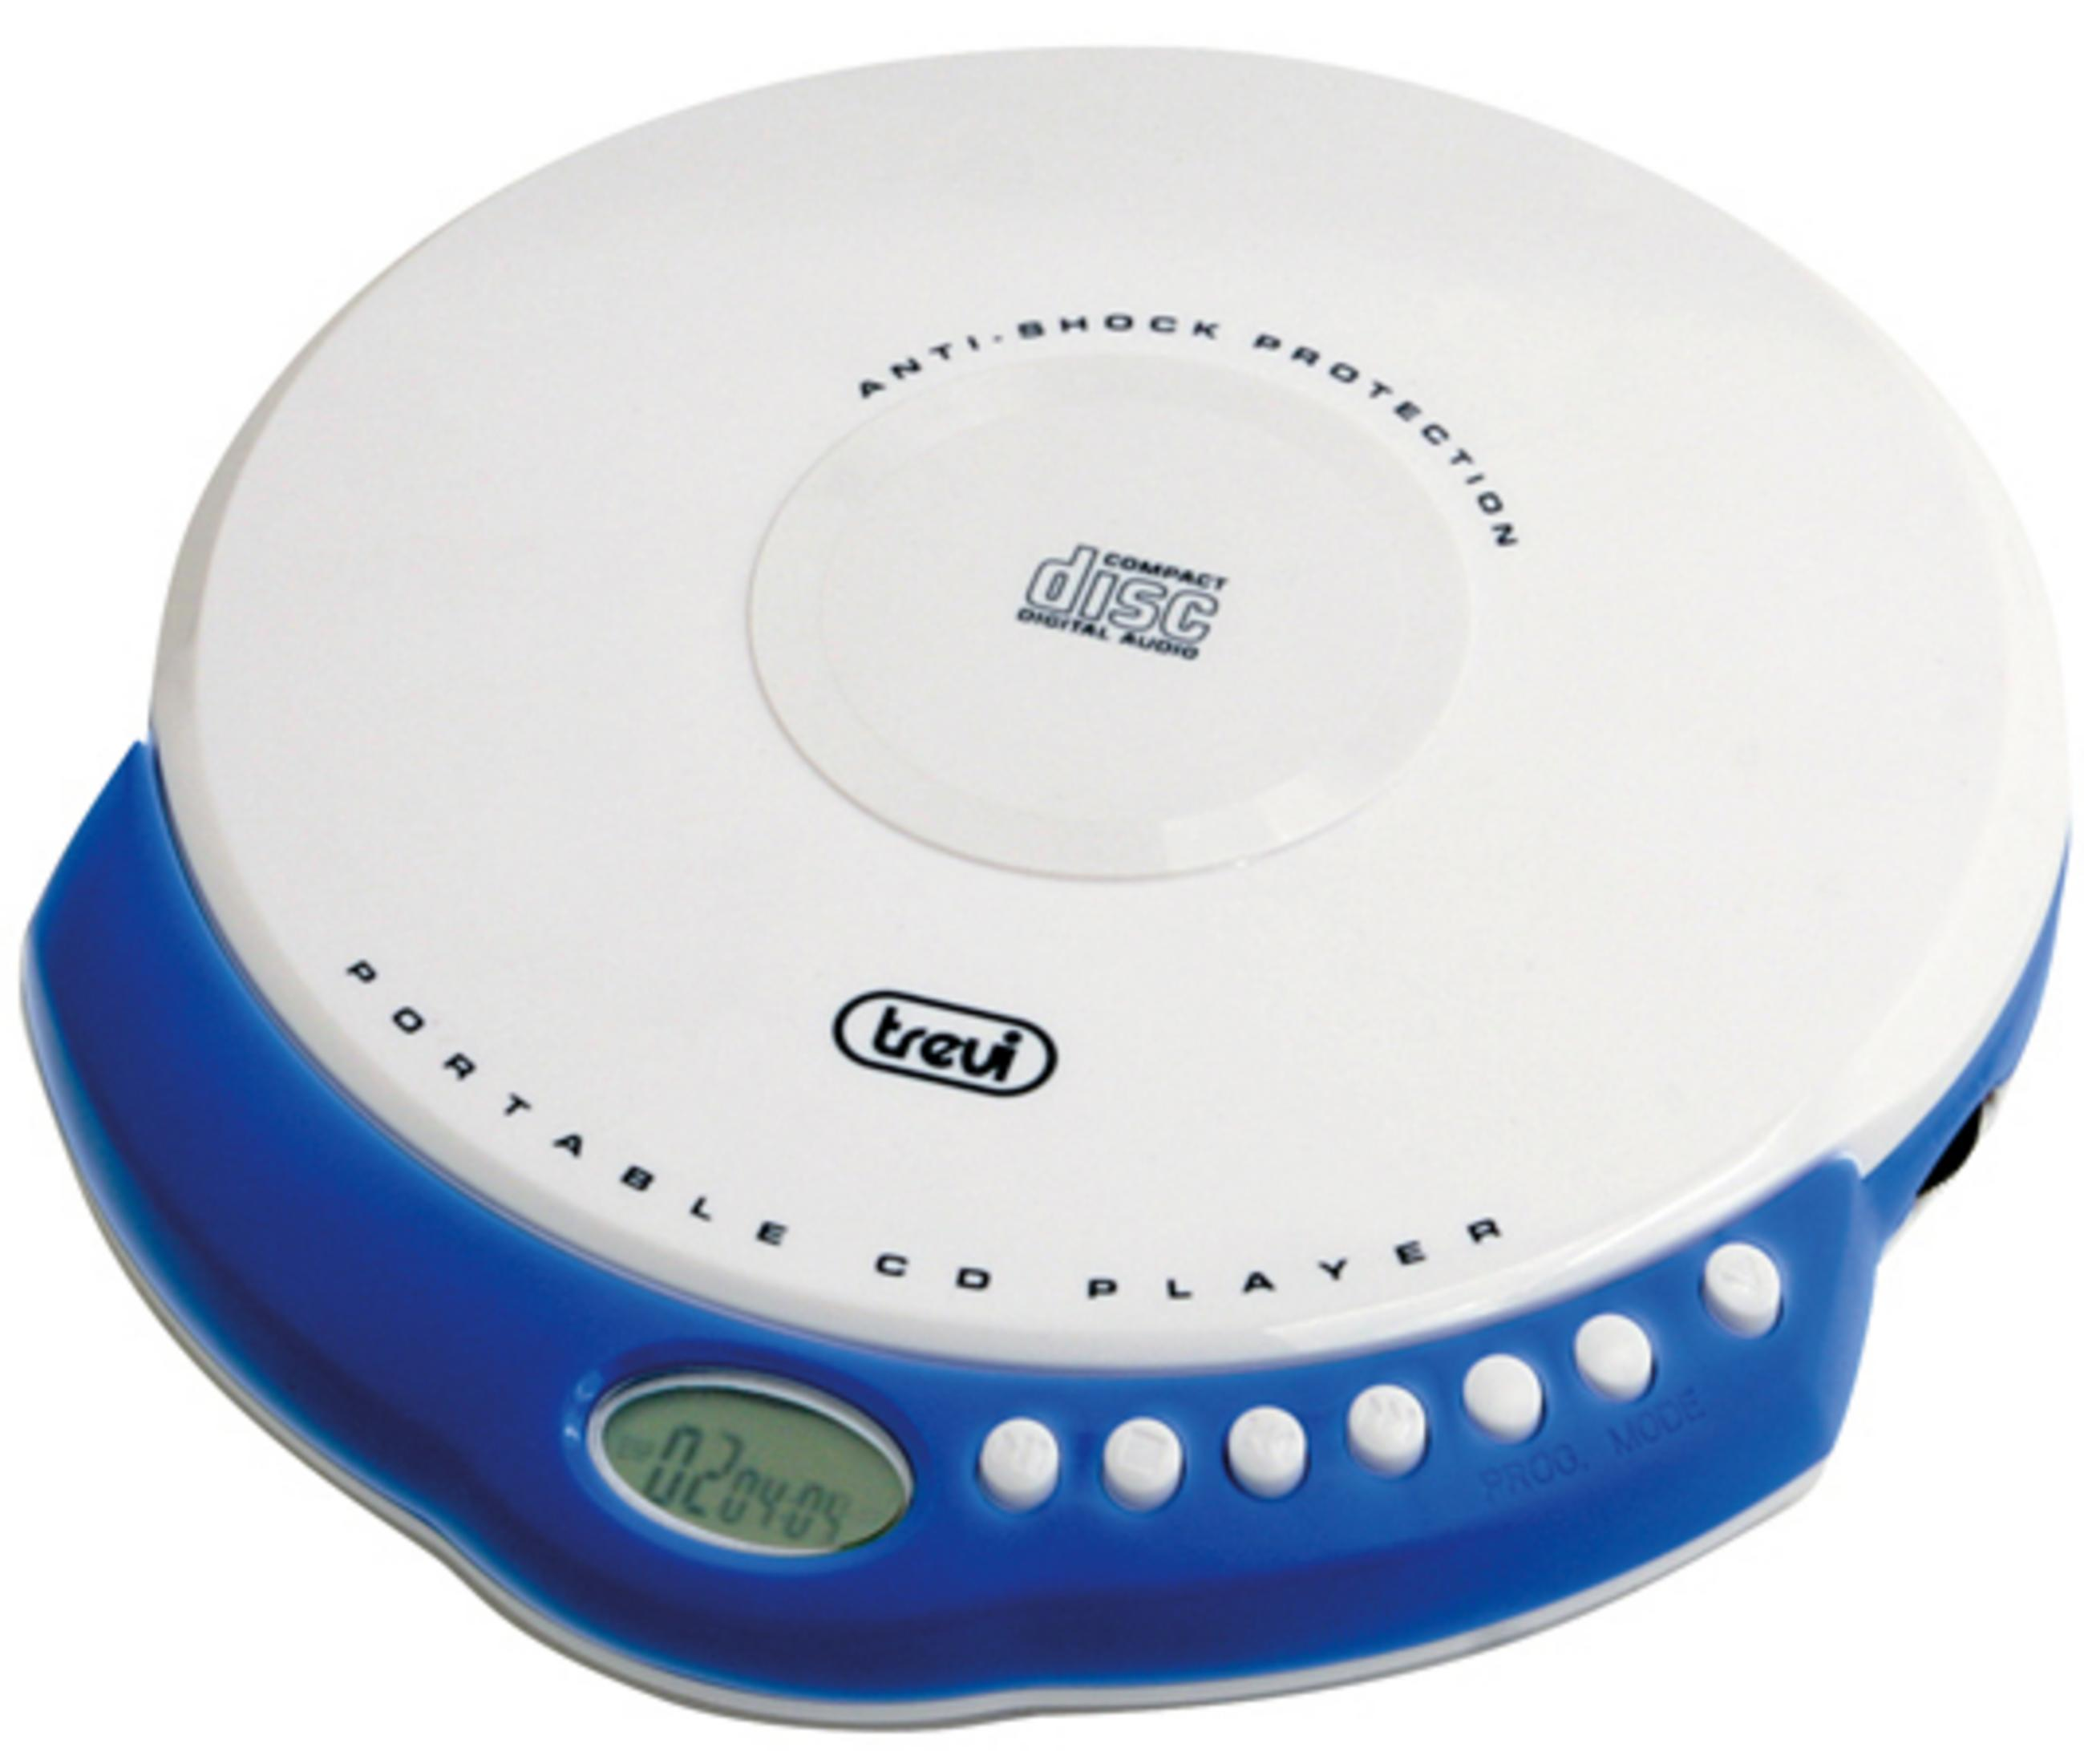 TREVI CMP 498 PORTABLE CD/MP3-PLAYER Weiß/Blau Tragbarer CD WHITE Player